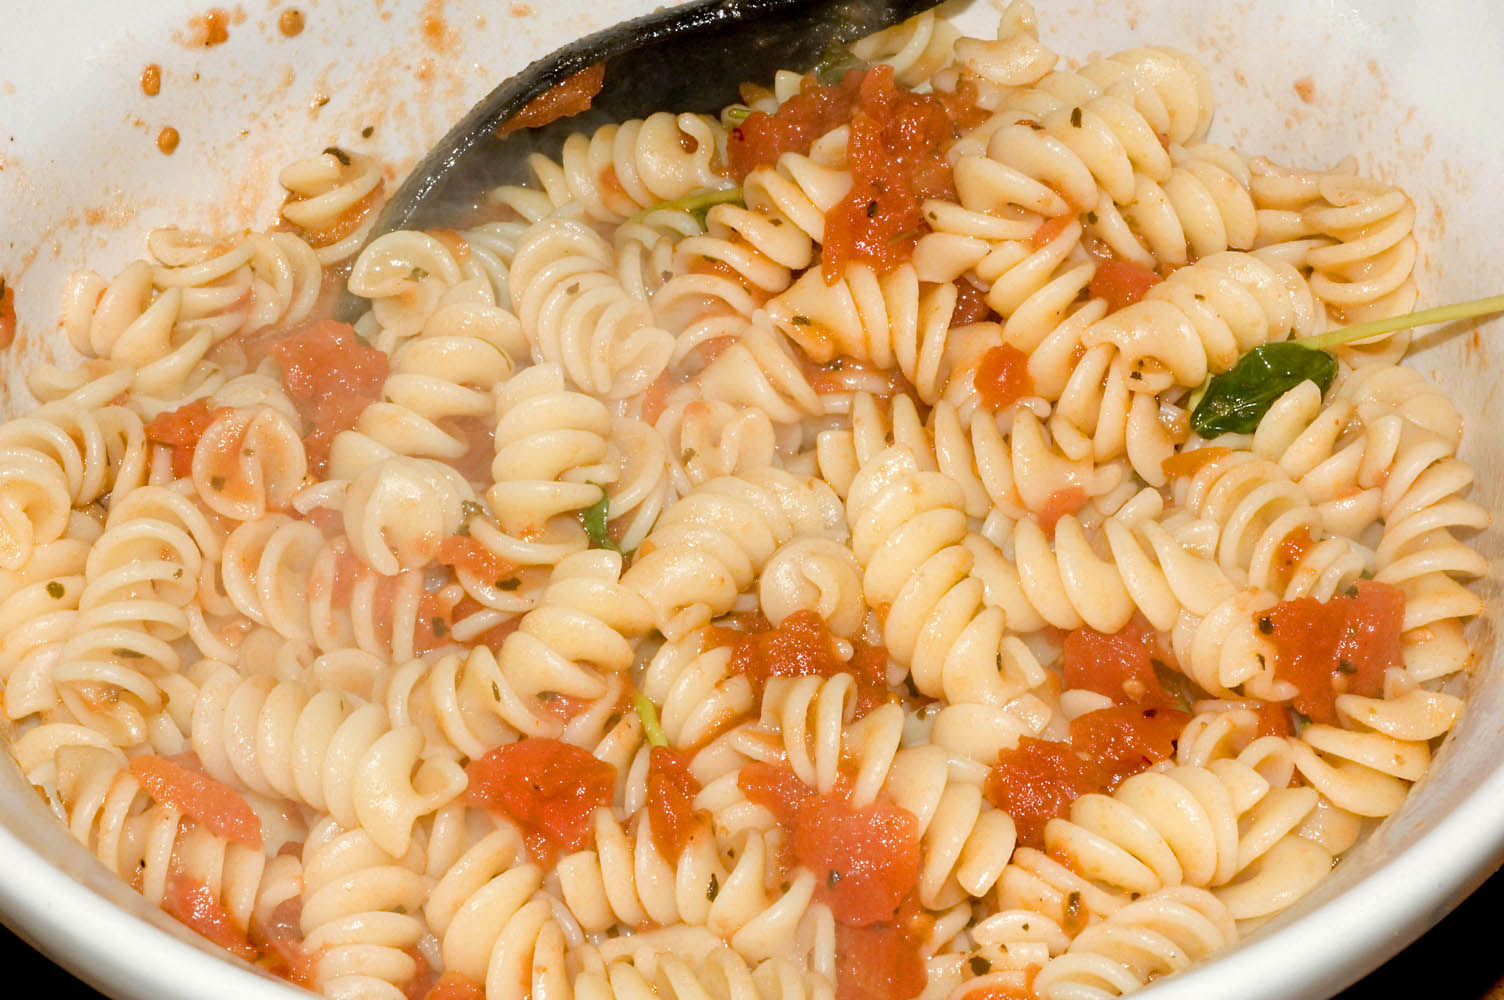 rotini pasta and tomato sauce (large) photo - rsub8 photos at pbase.com